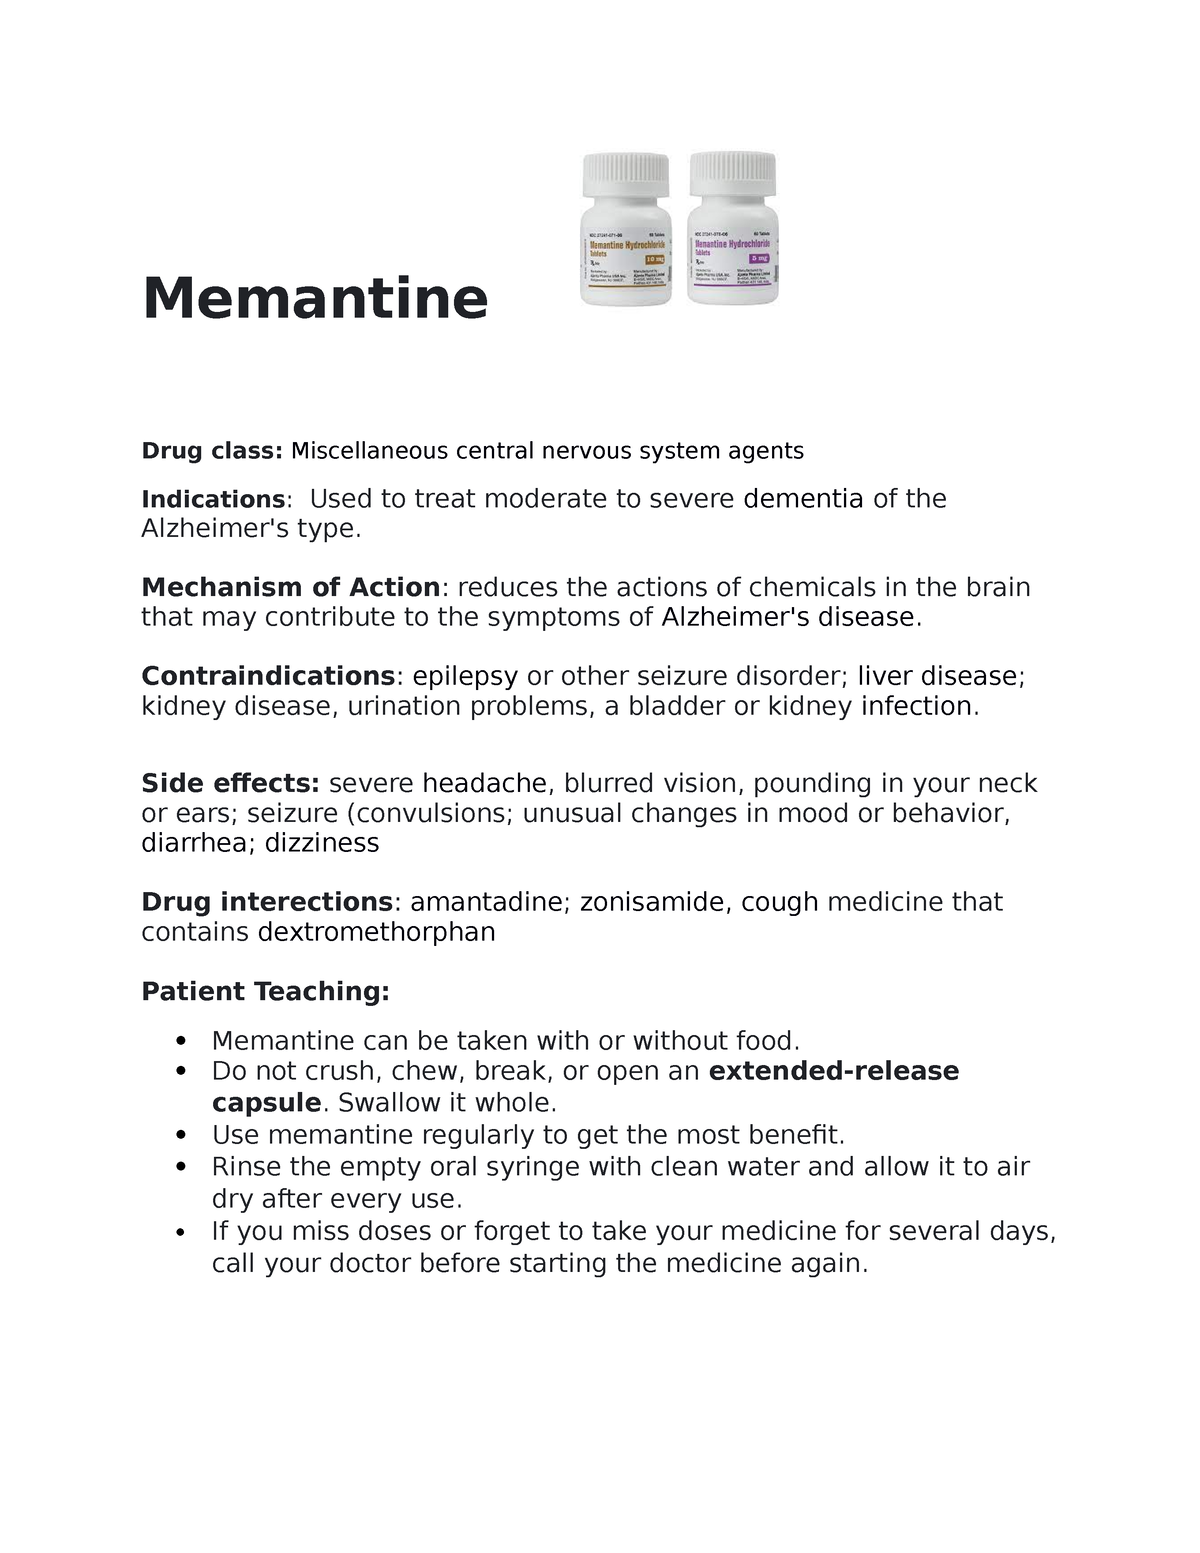 Memantine Meds Memantine Drug Class Miscellaneous Central Nervous System Agents Indications 6709